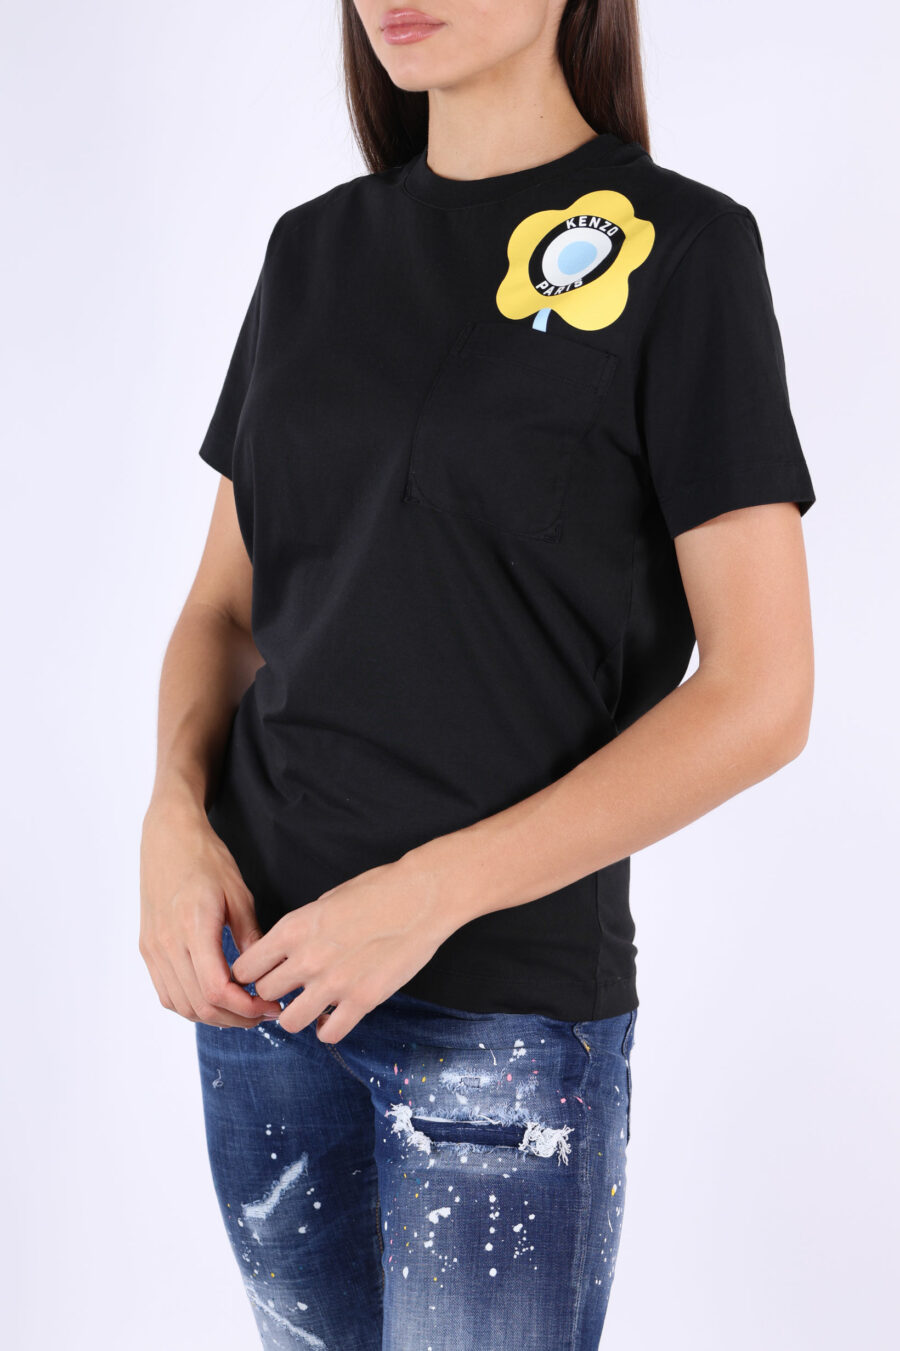 Schwarzes T-Shirt mit gelbem "kenzo target" Logo - 361223054662202017